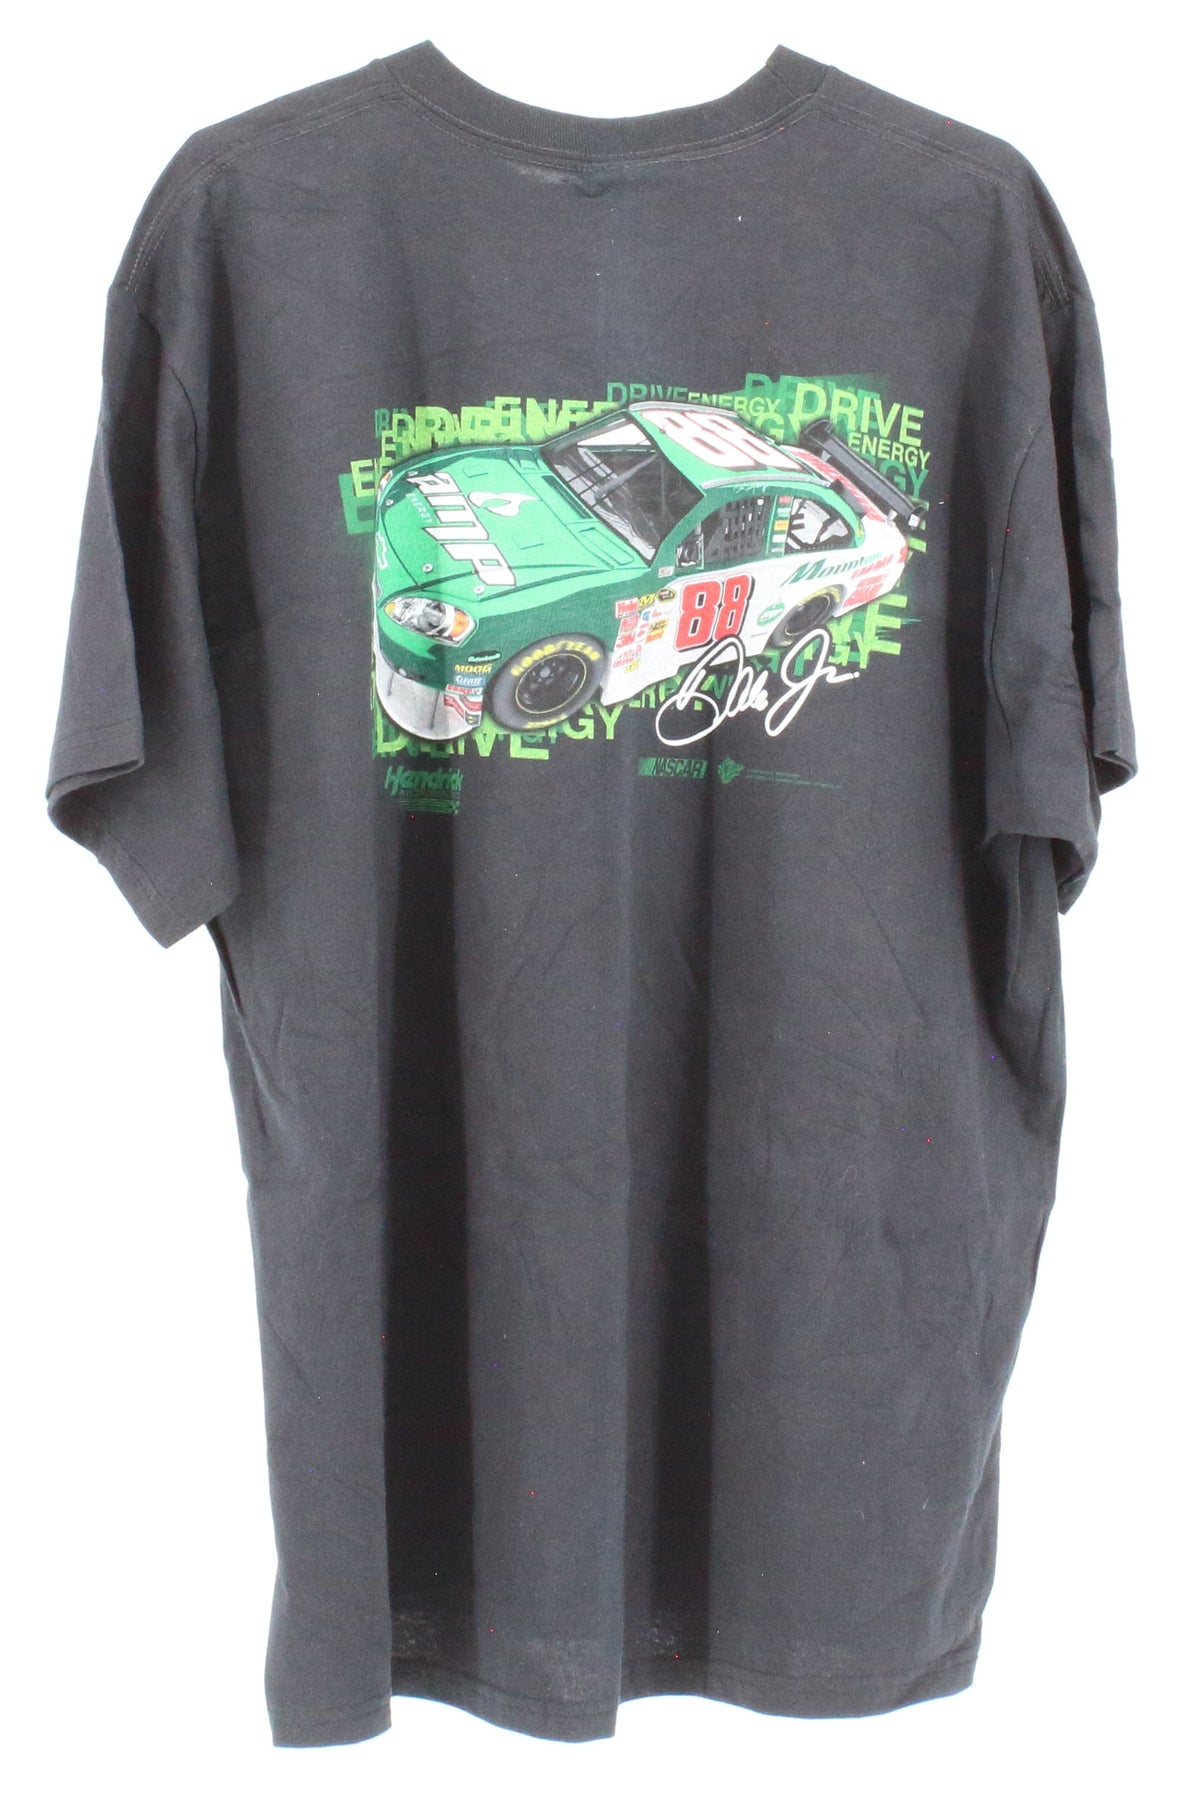 Winners Circle Black & Green Dale Jr 88 Front & Back Graphic Racing T-Shirt